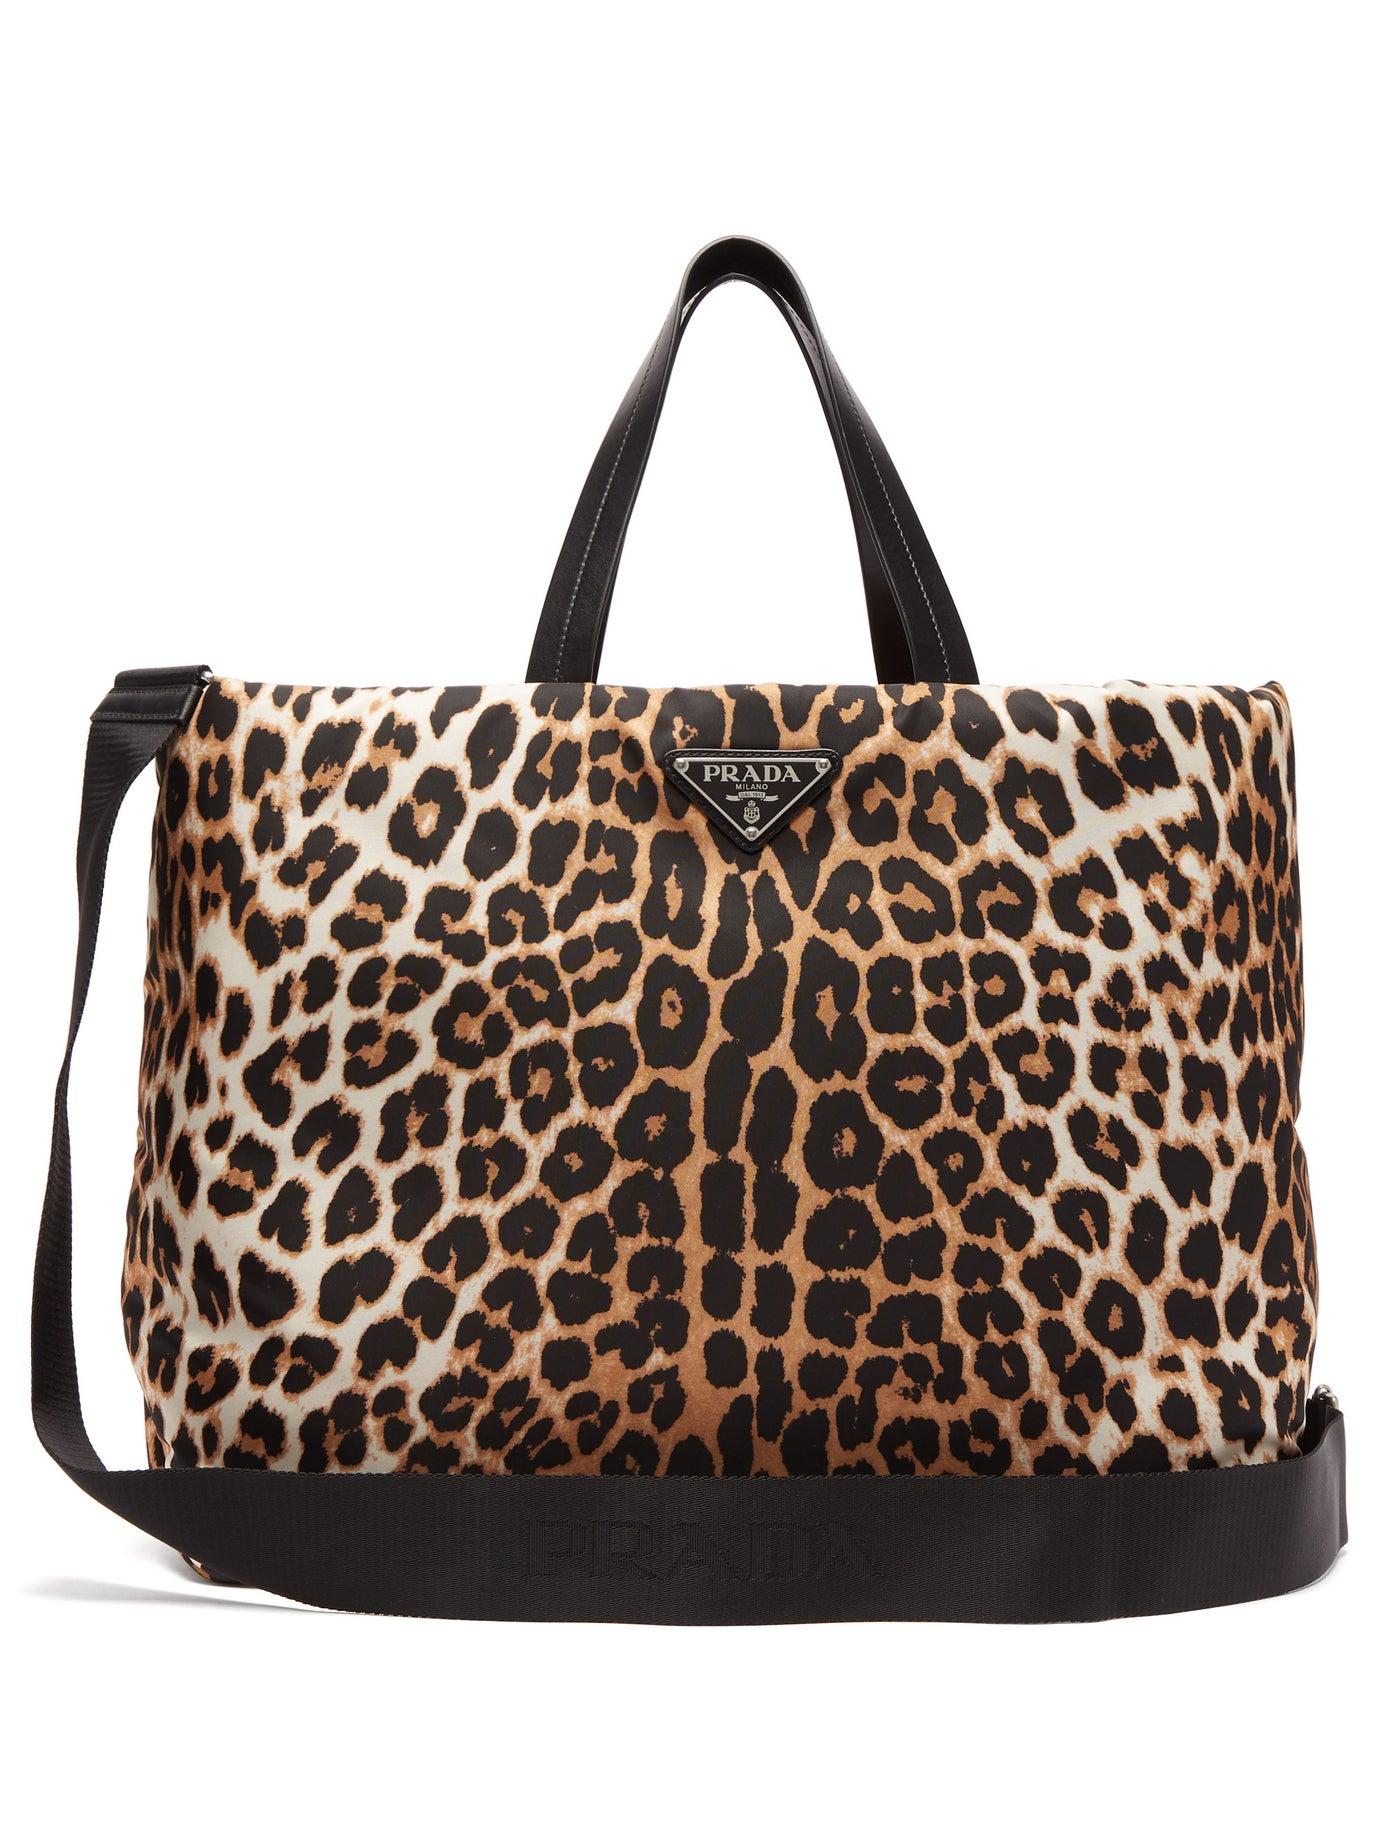 Prada Leopard Print Padded Nylon Tote Bag in Brown | Lyst